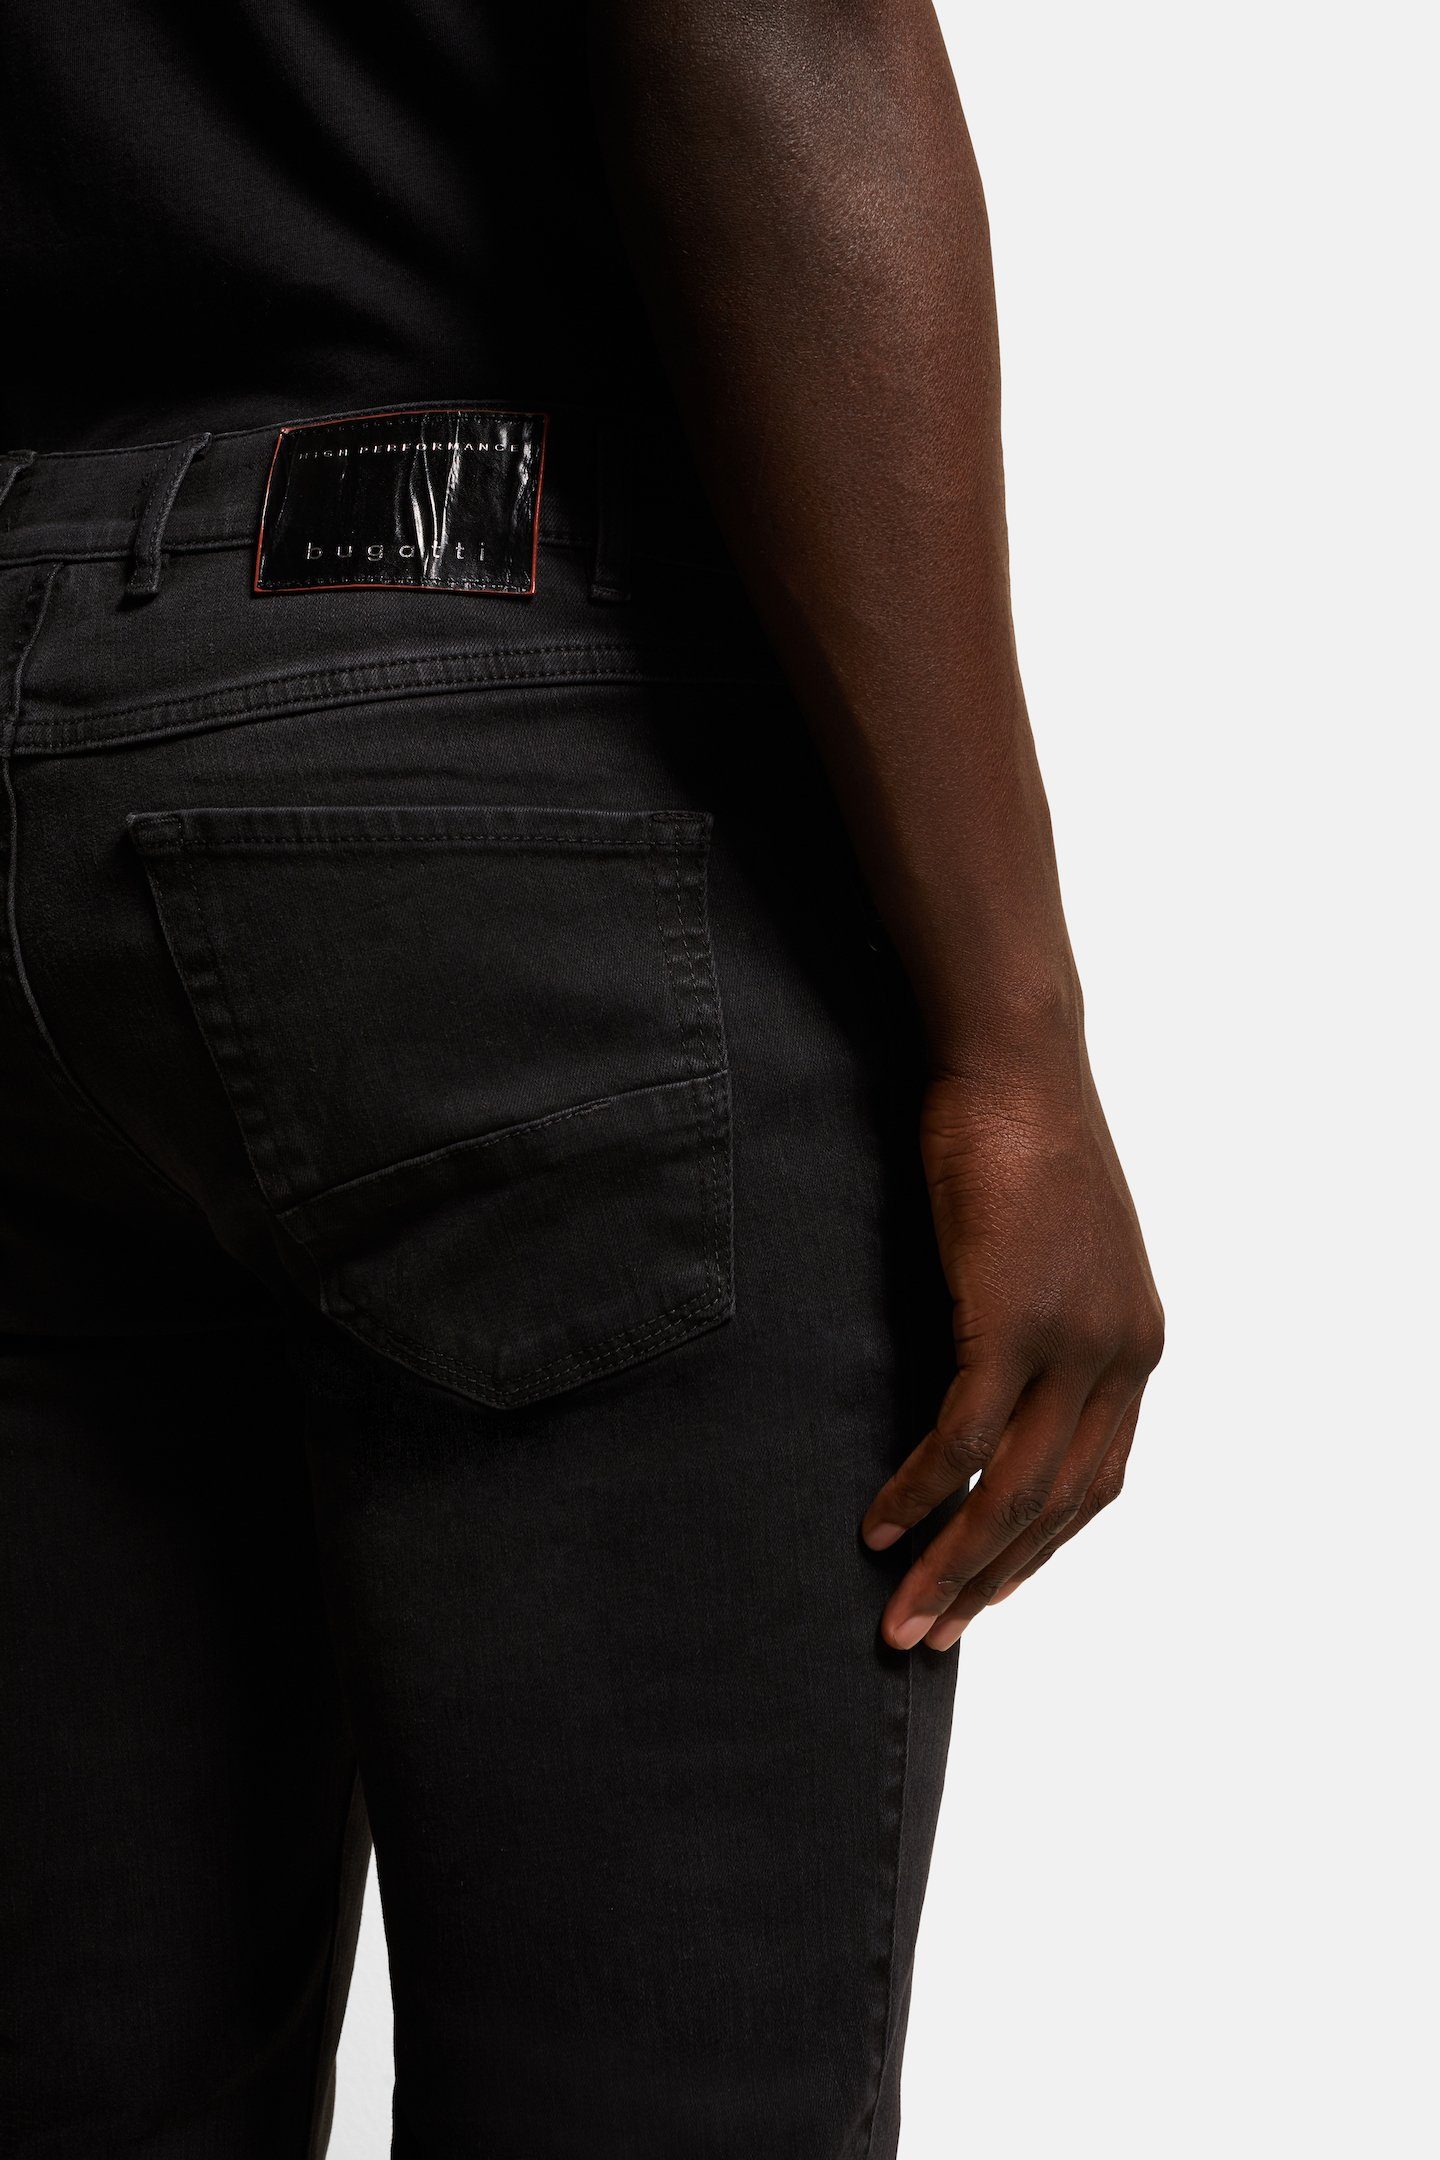 bugatti 5-Pocket-Jeans Flexcity Denim mit Tragekomfort hohem dunkelgrau